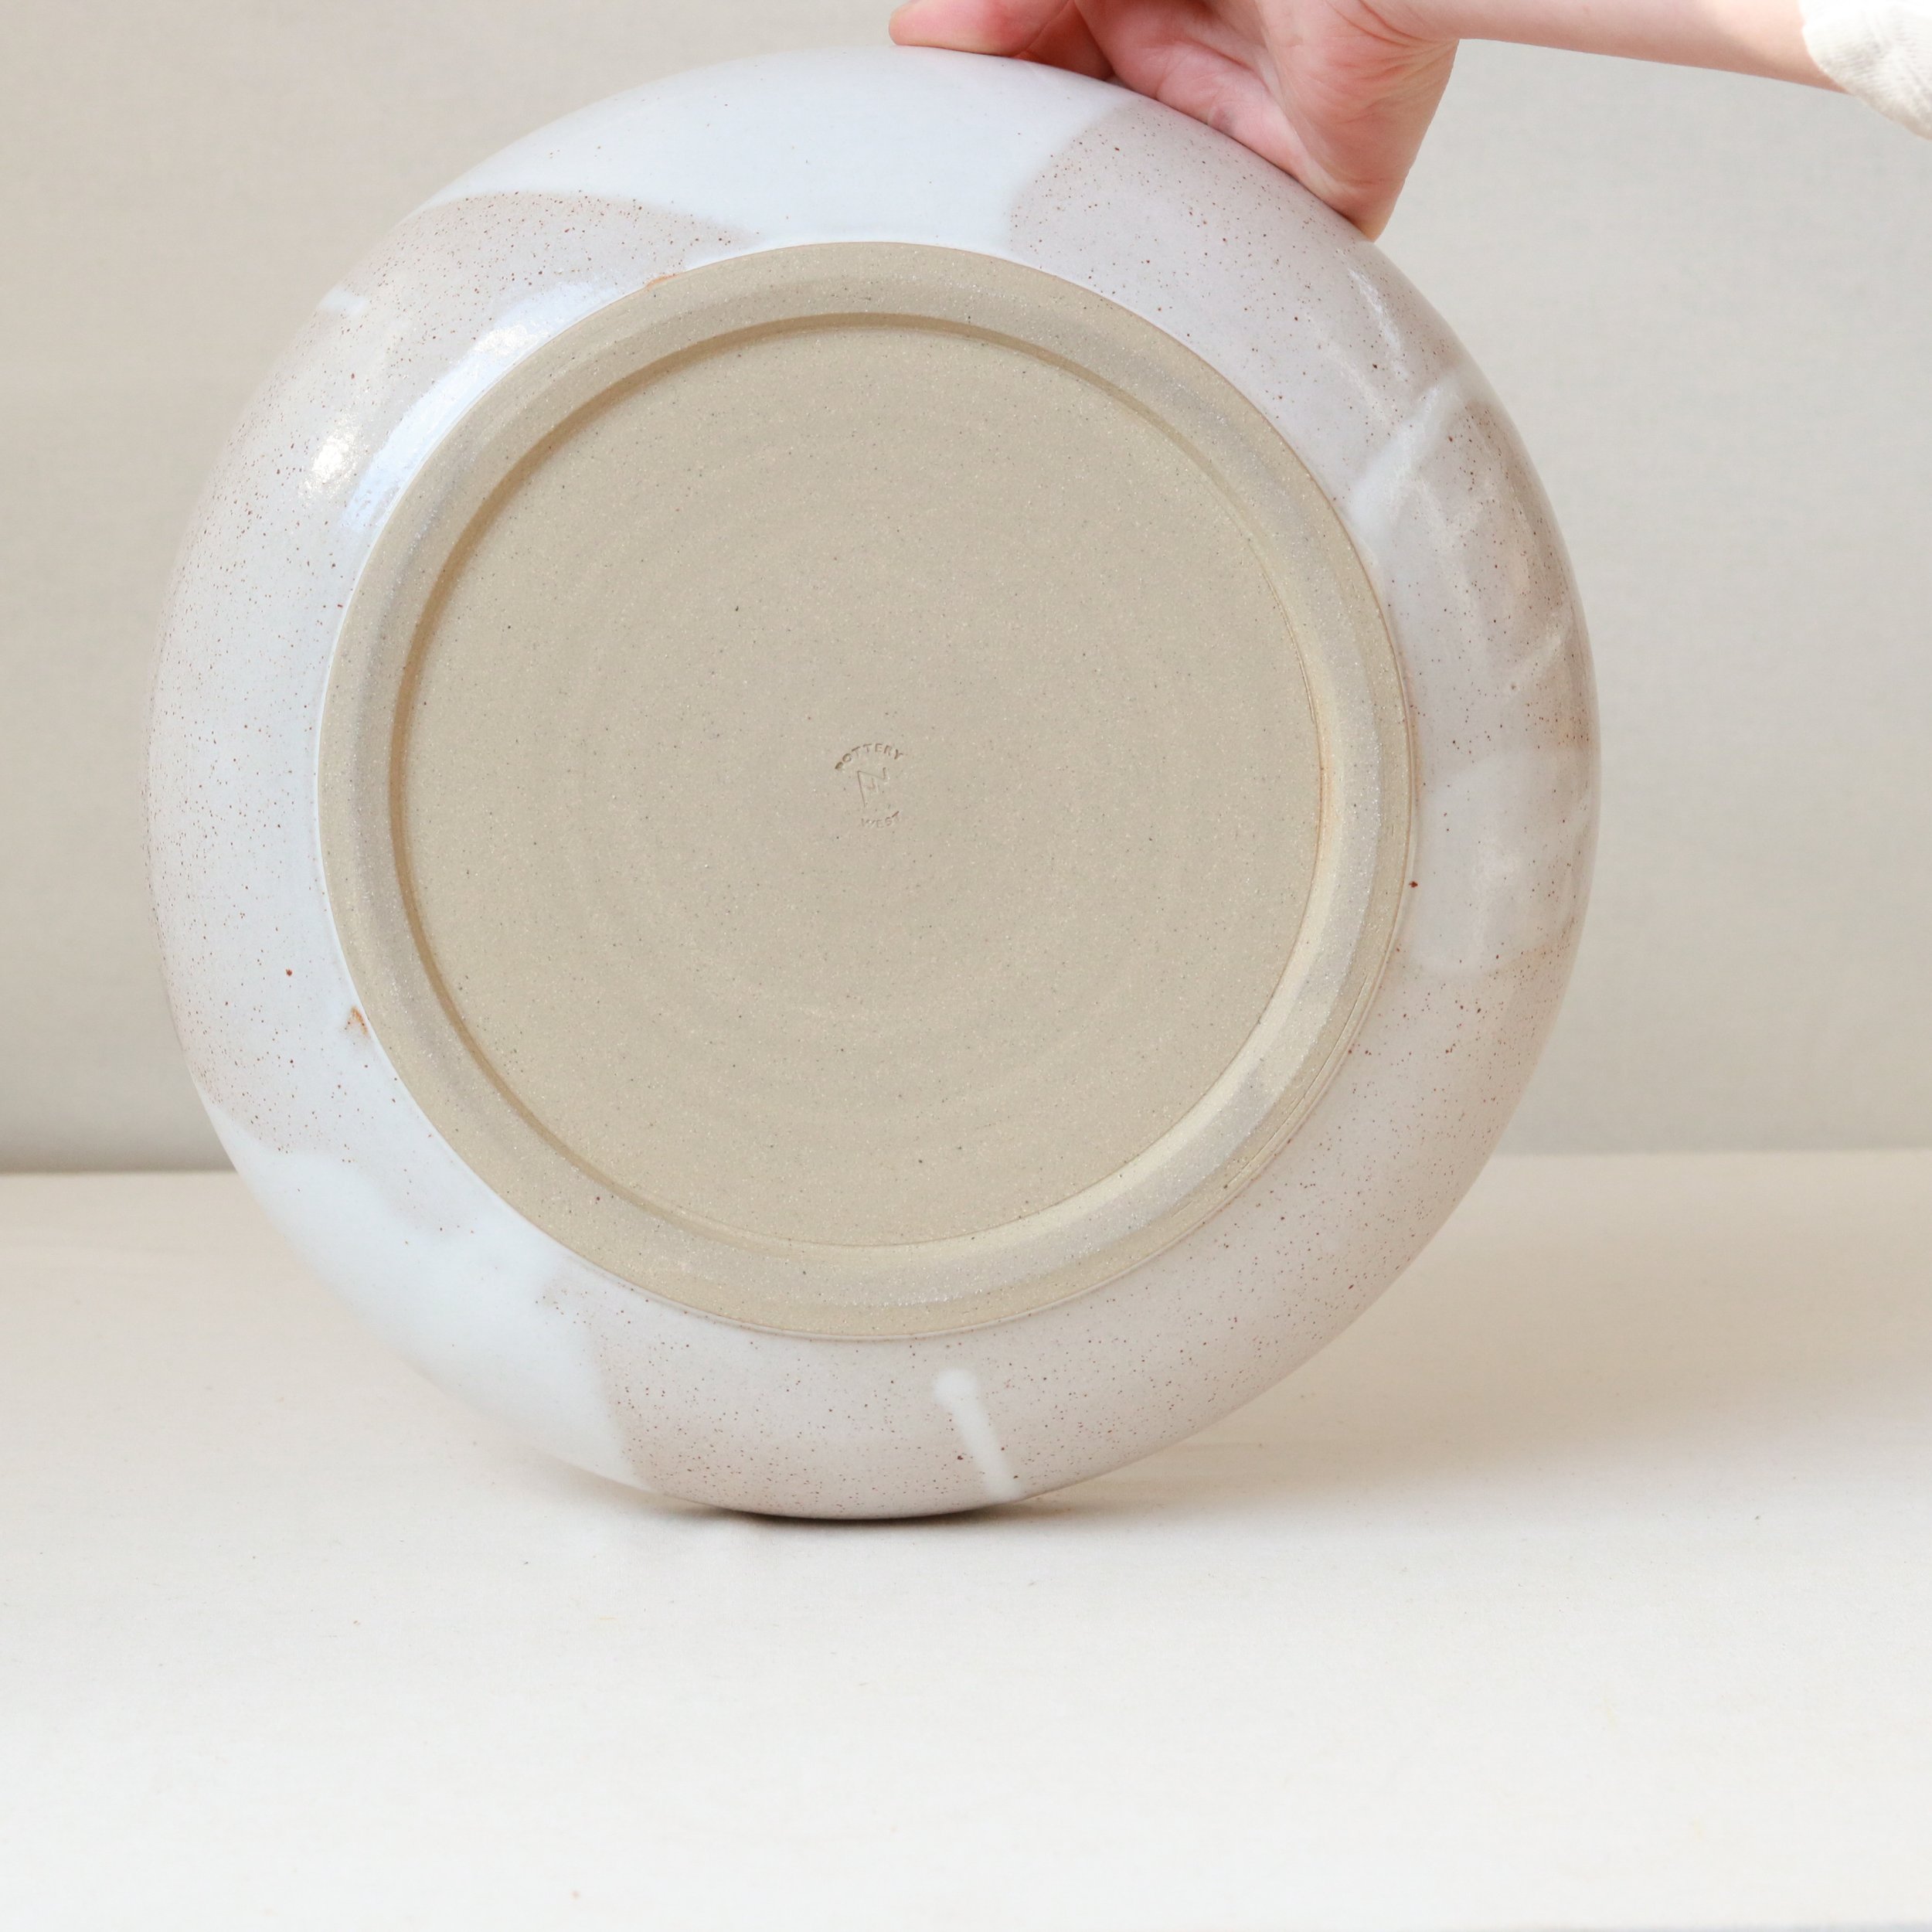 Serving Bowl in Speckled White, Flecked Stoneware-1.jpg